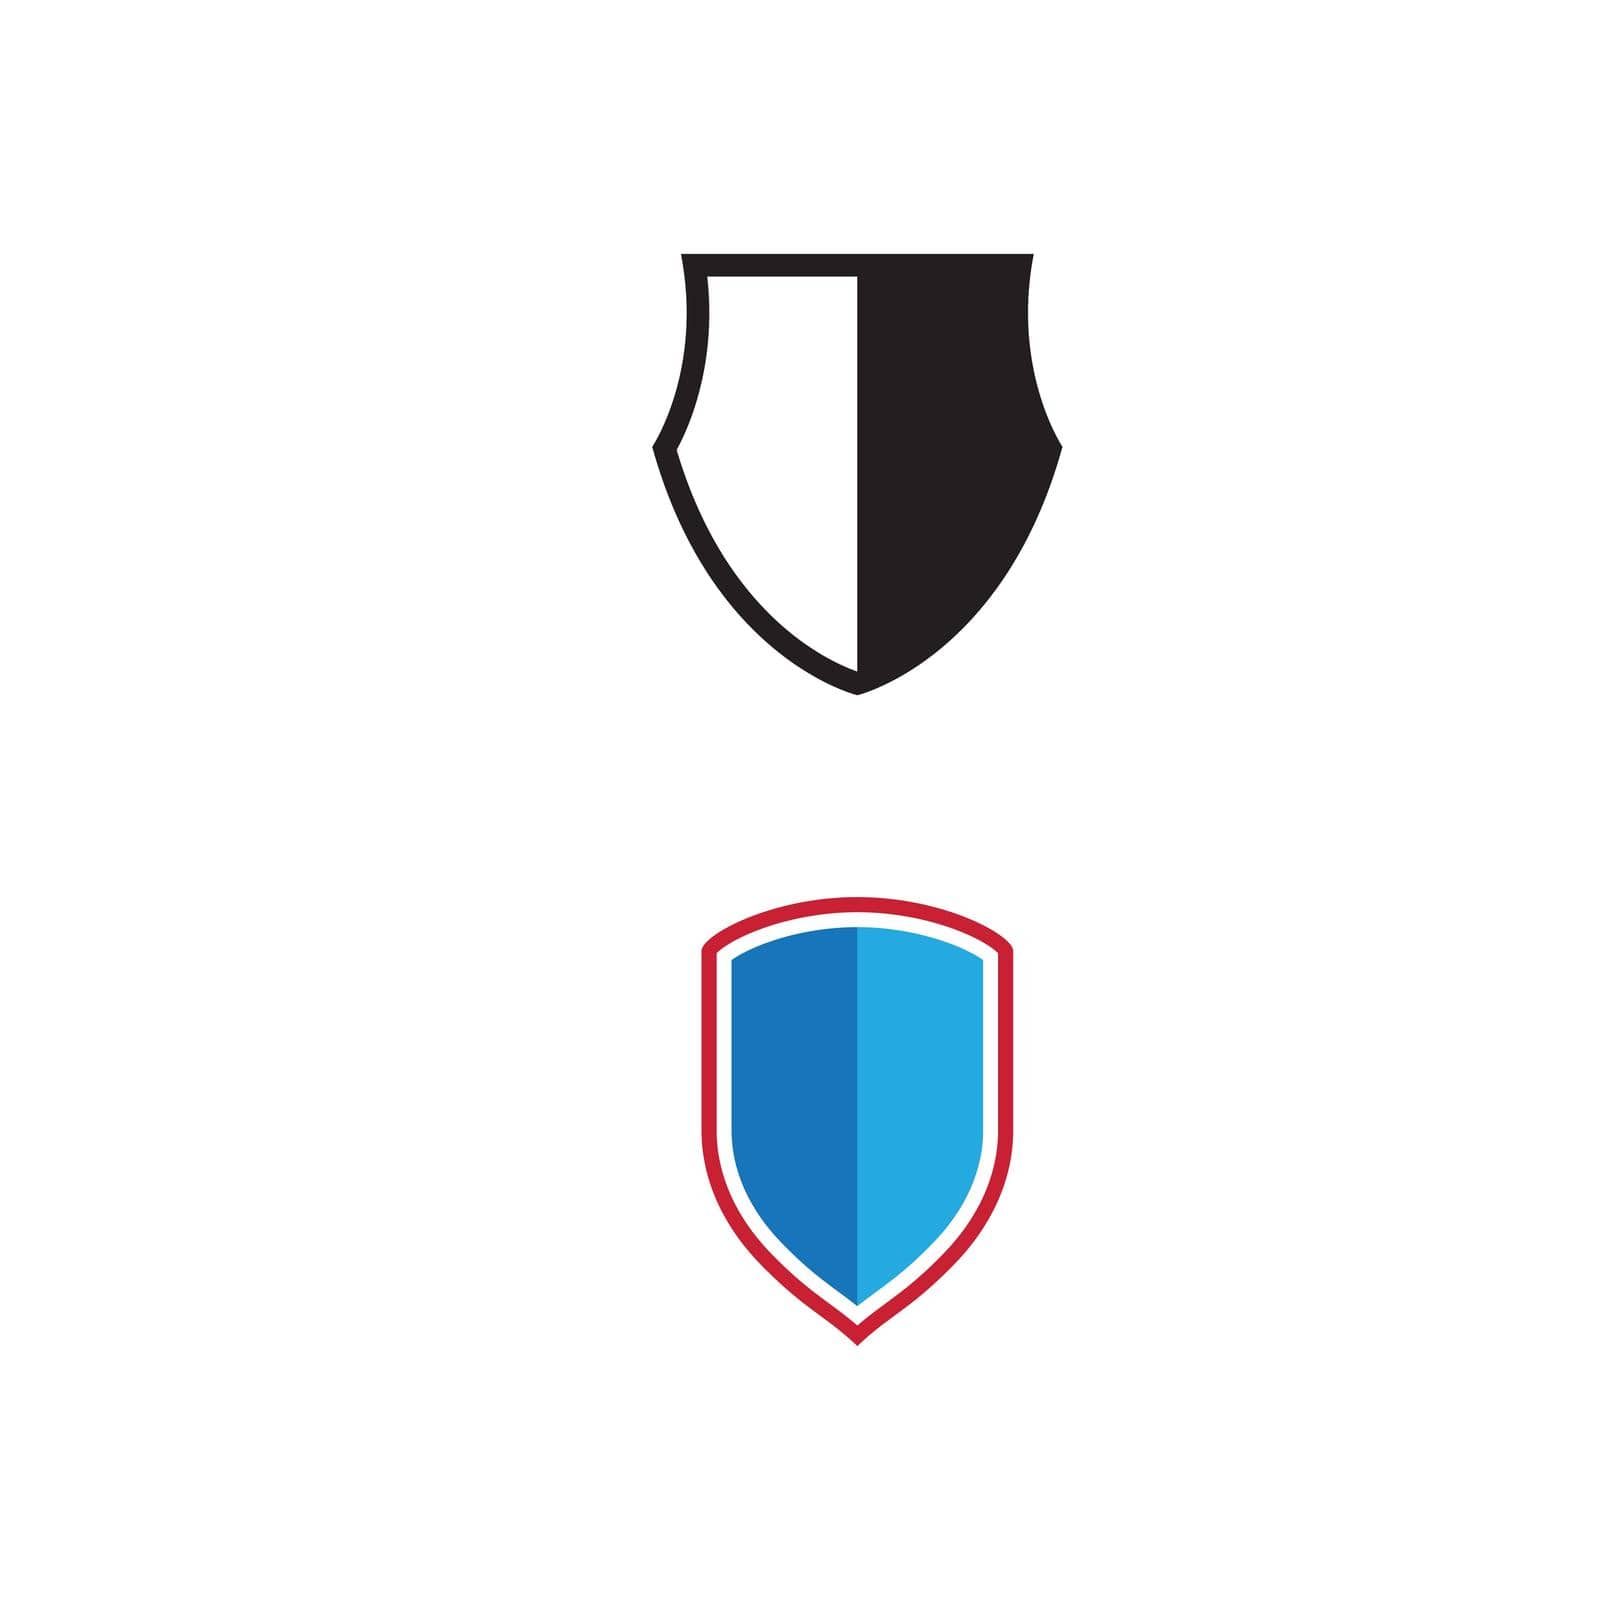 Shield Logo Template vector symbol nature